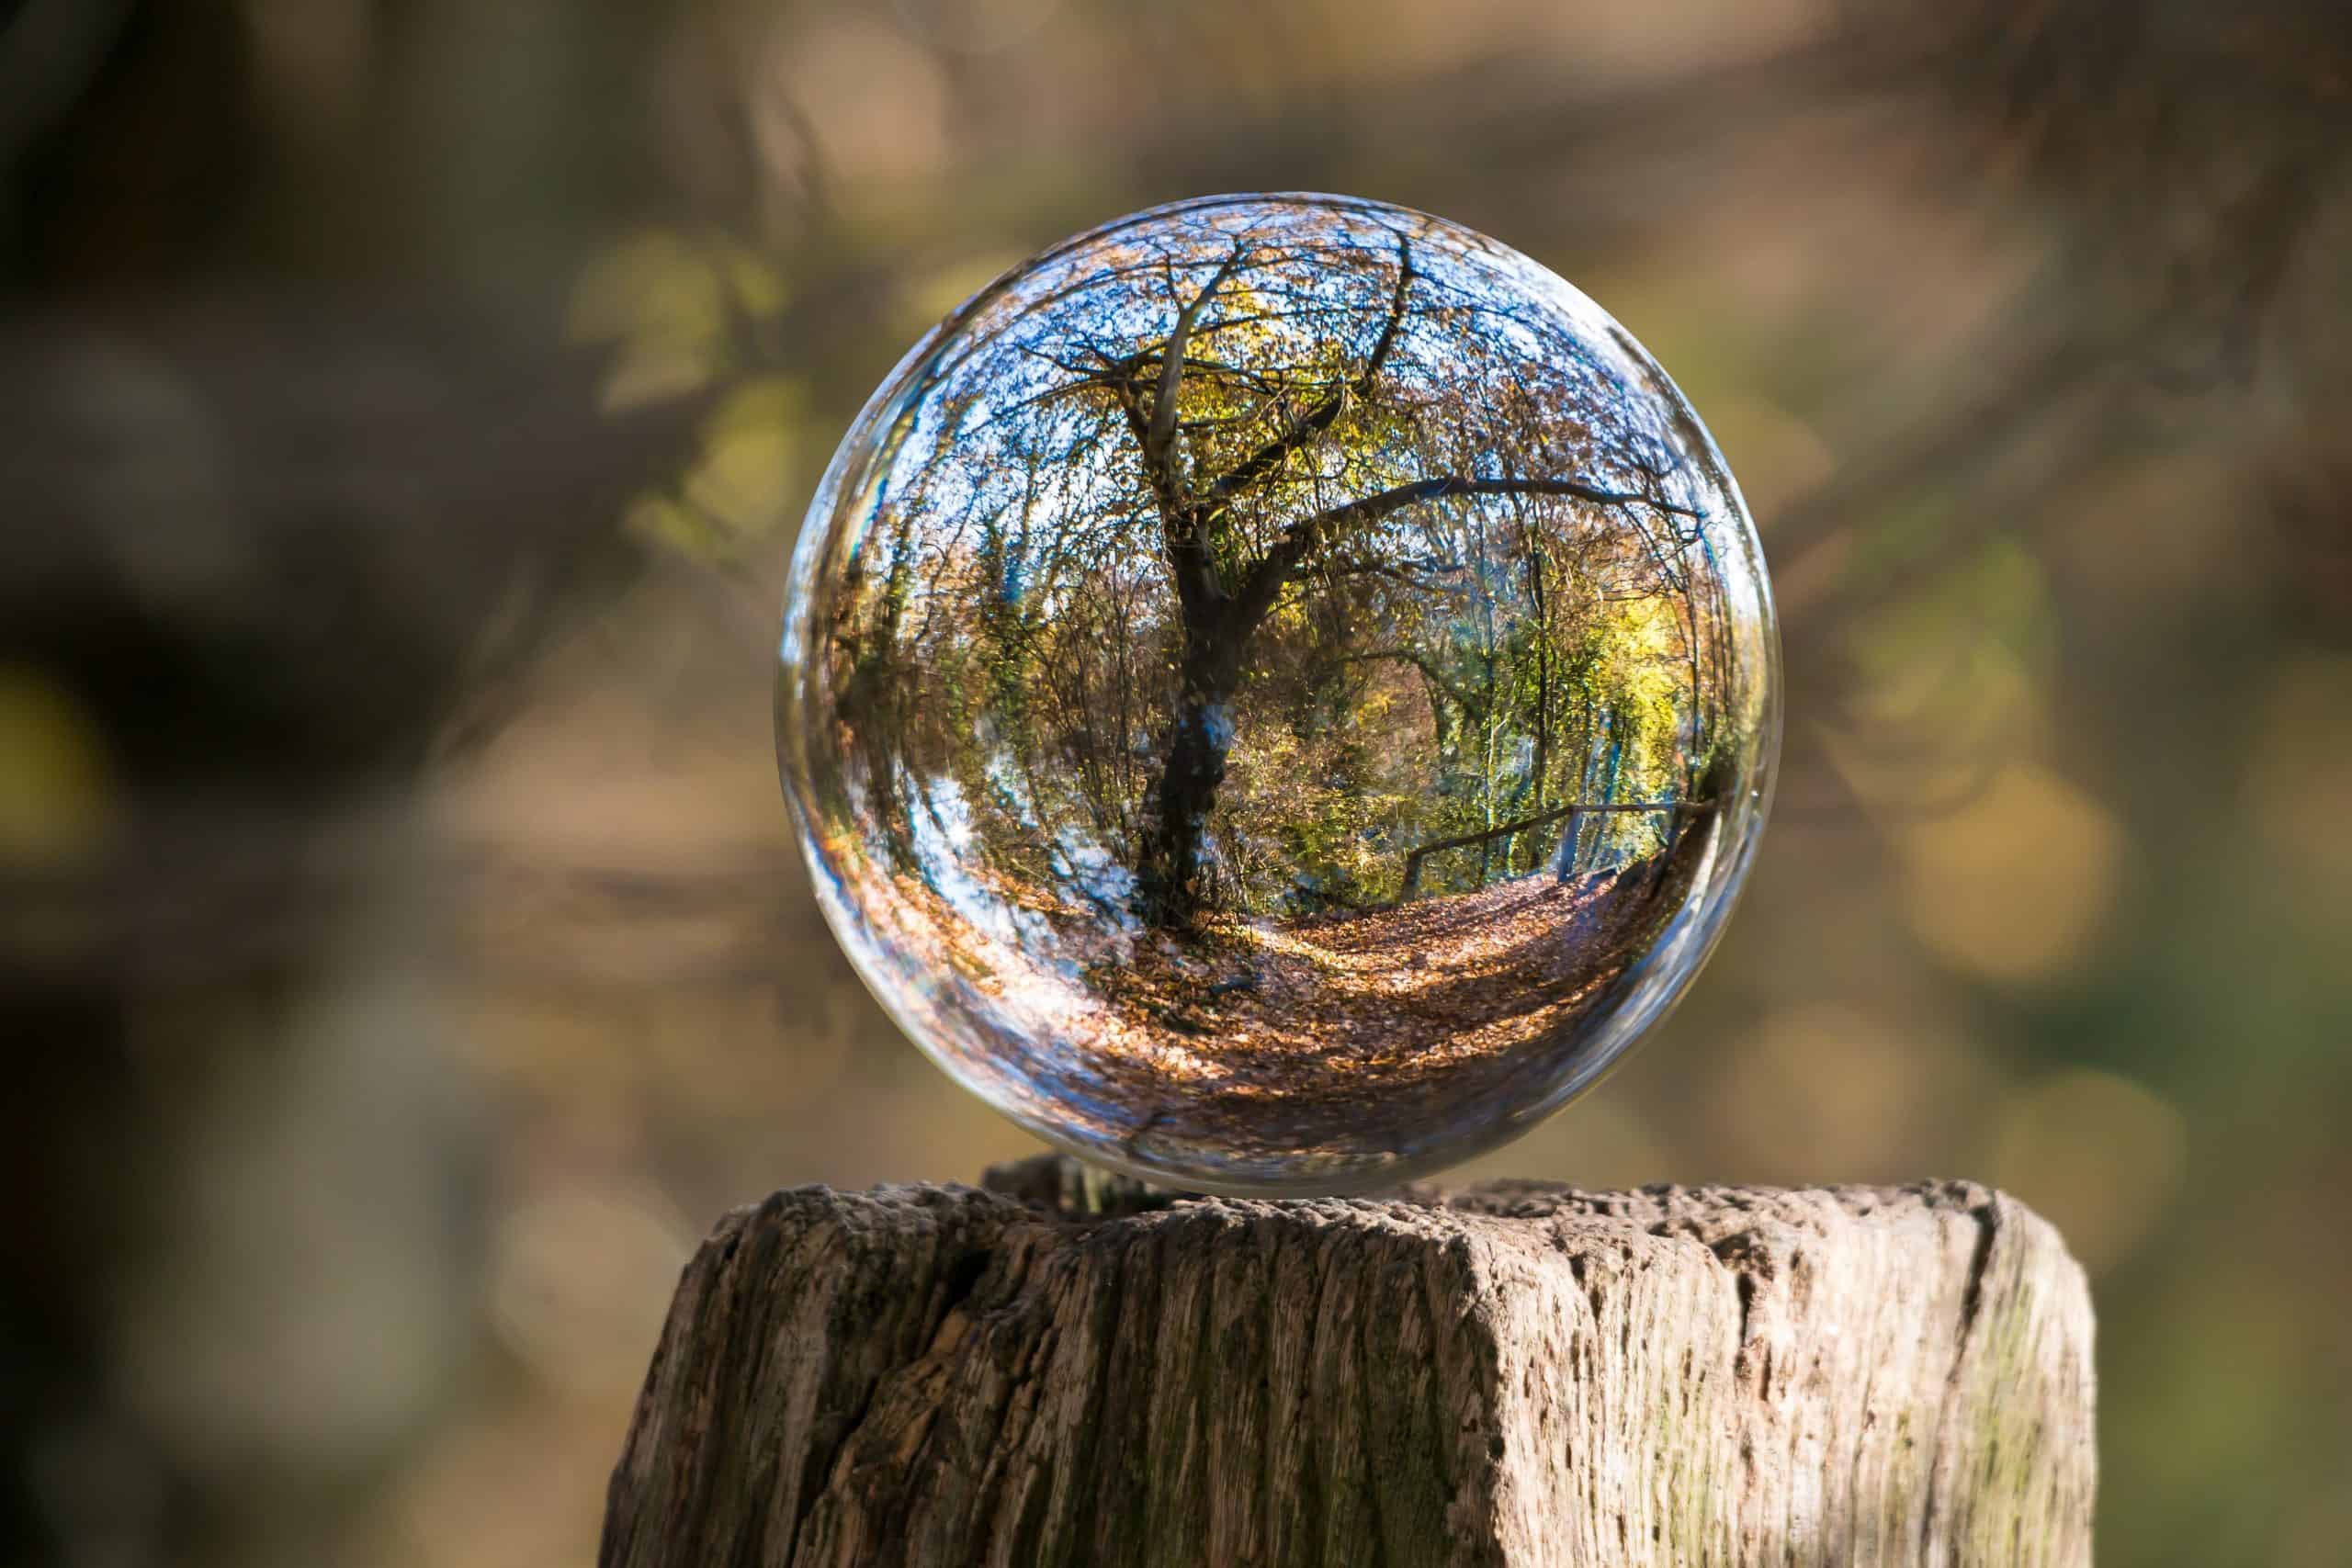 bublina na dreve